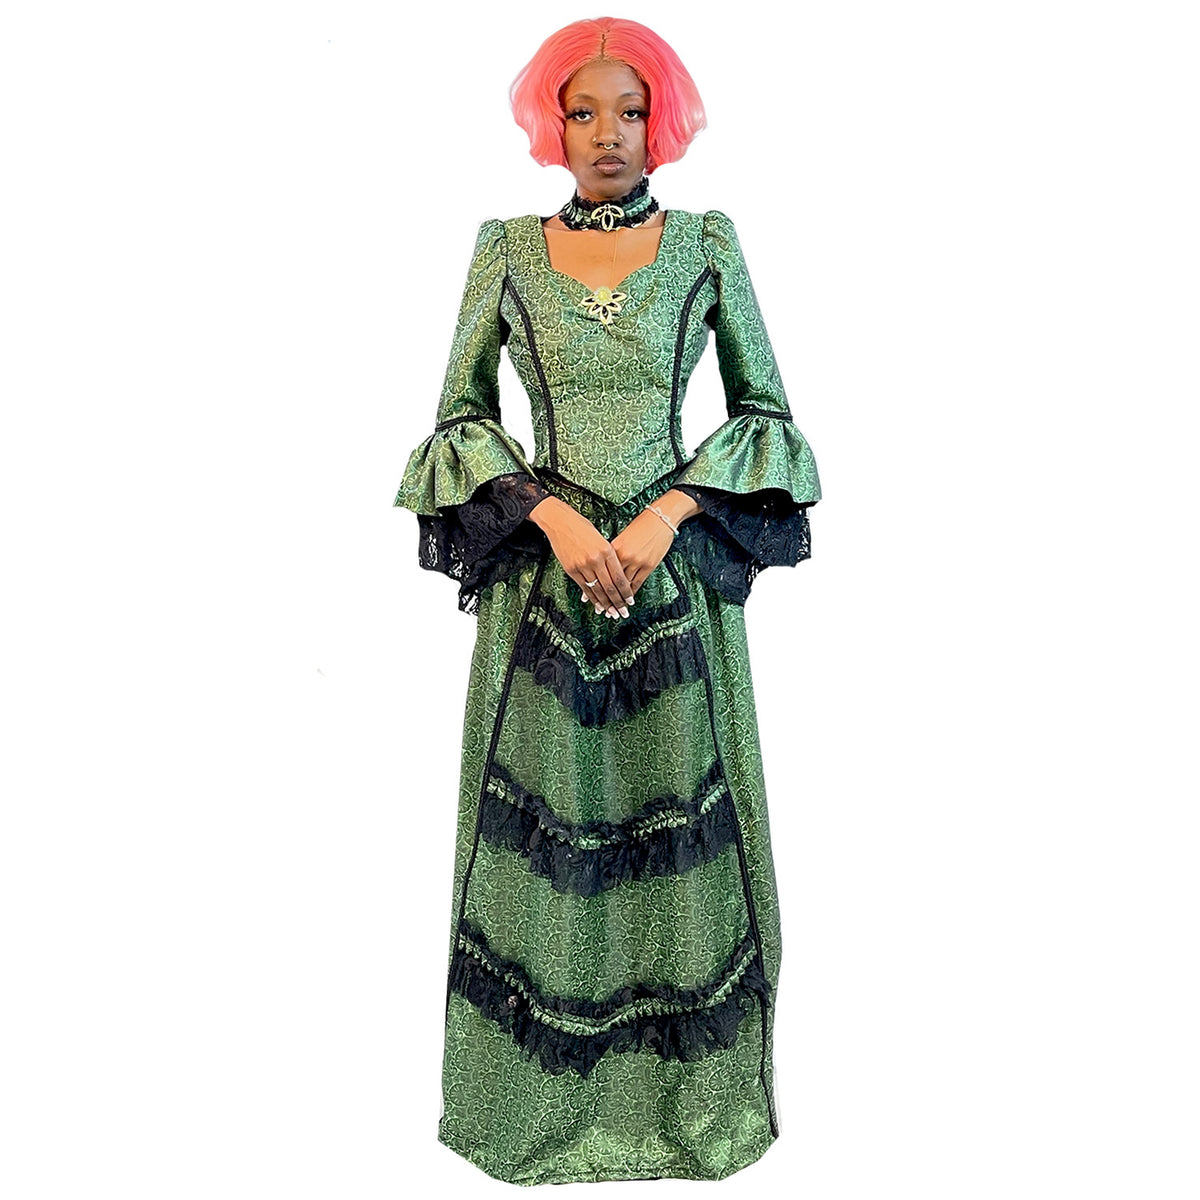 Exclusive Sage Green Colonial Queen Women's Adult Costume